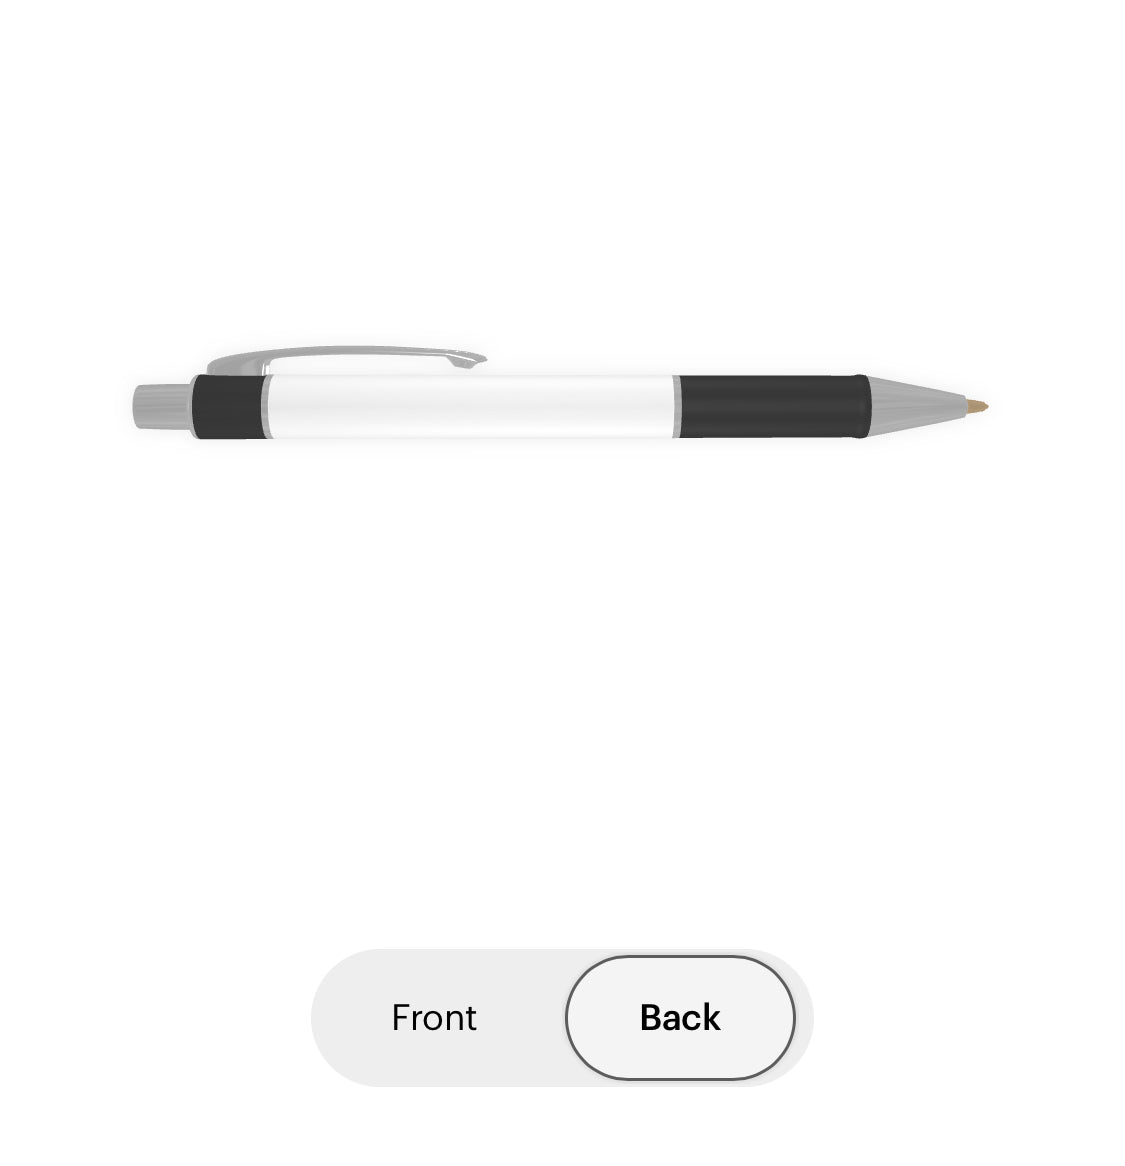 vetmedology Customizable Black Ballpoint Pen